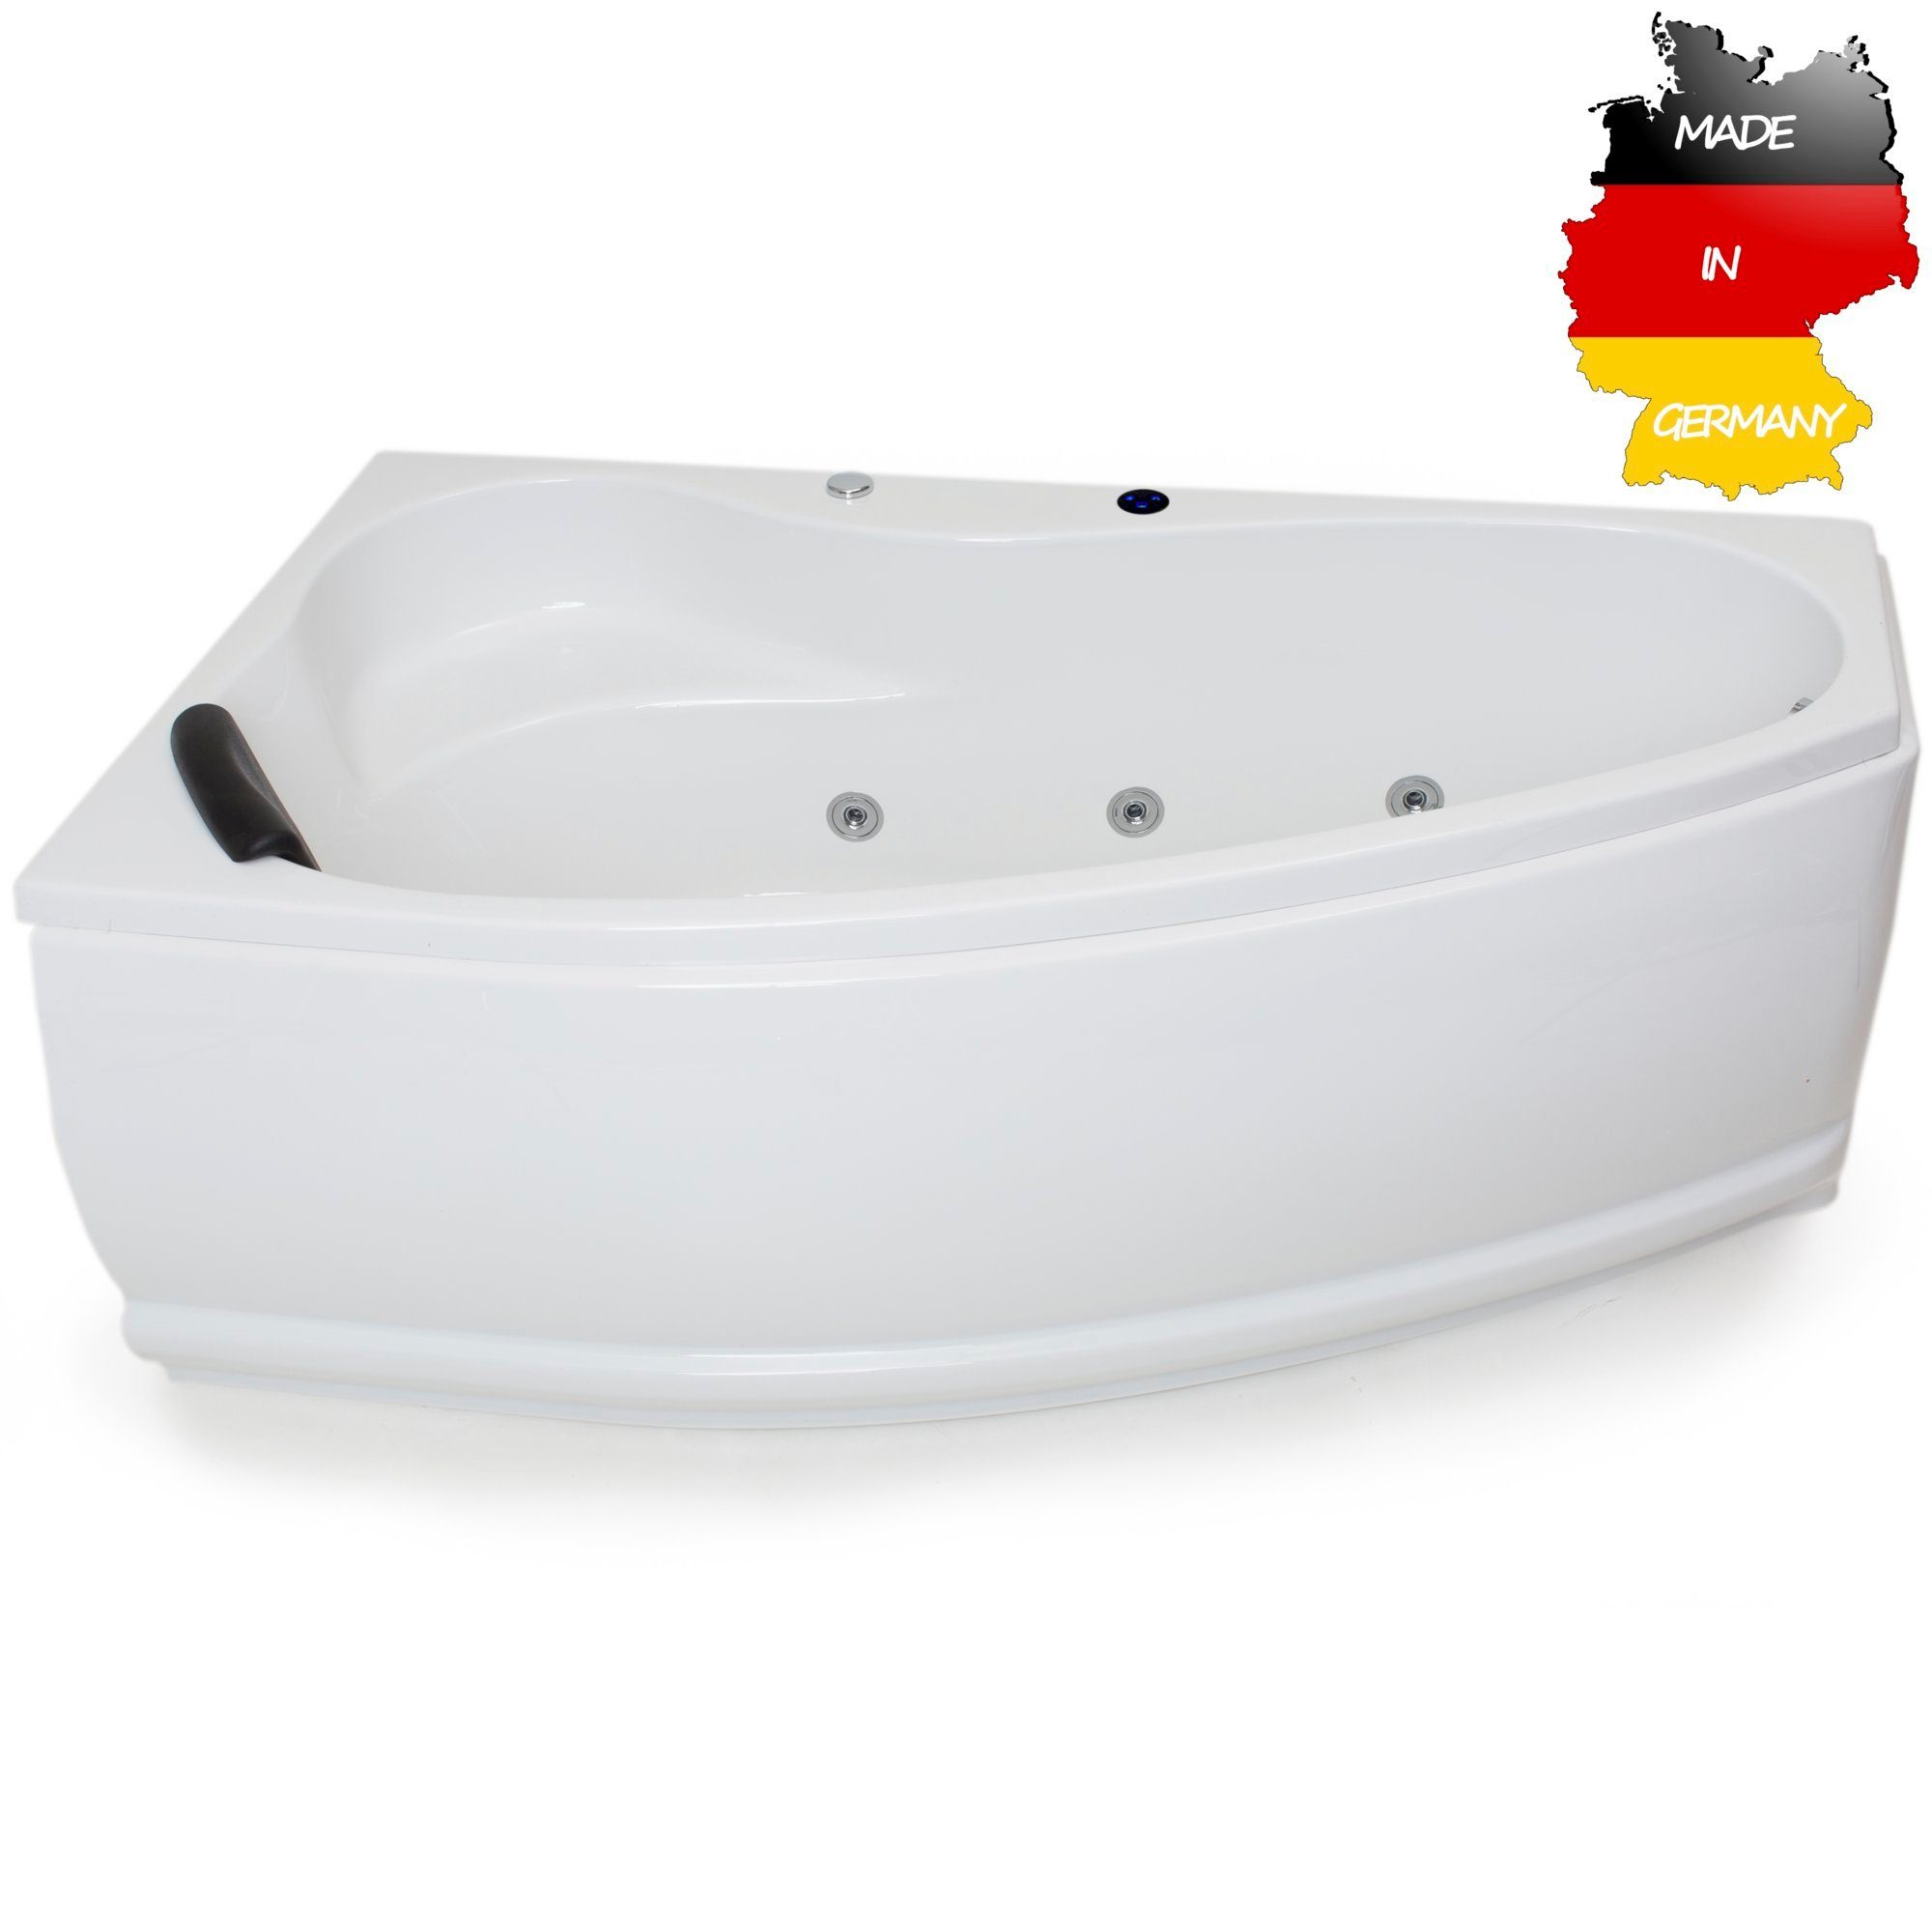 Basera® Whirlpool-Badewanne BASIC Indoor Eck-Whirlpool Badewanne Formentera Links 160 x 90 cm, (Komplett-Set), mit 9 Massagedüsen, LED